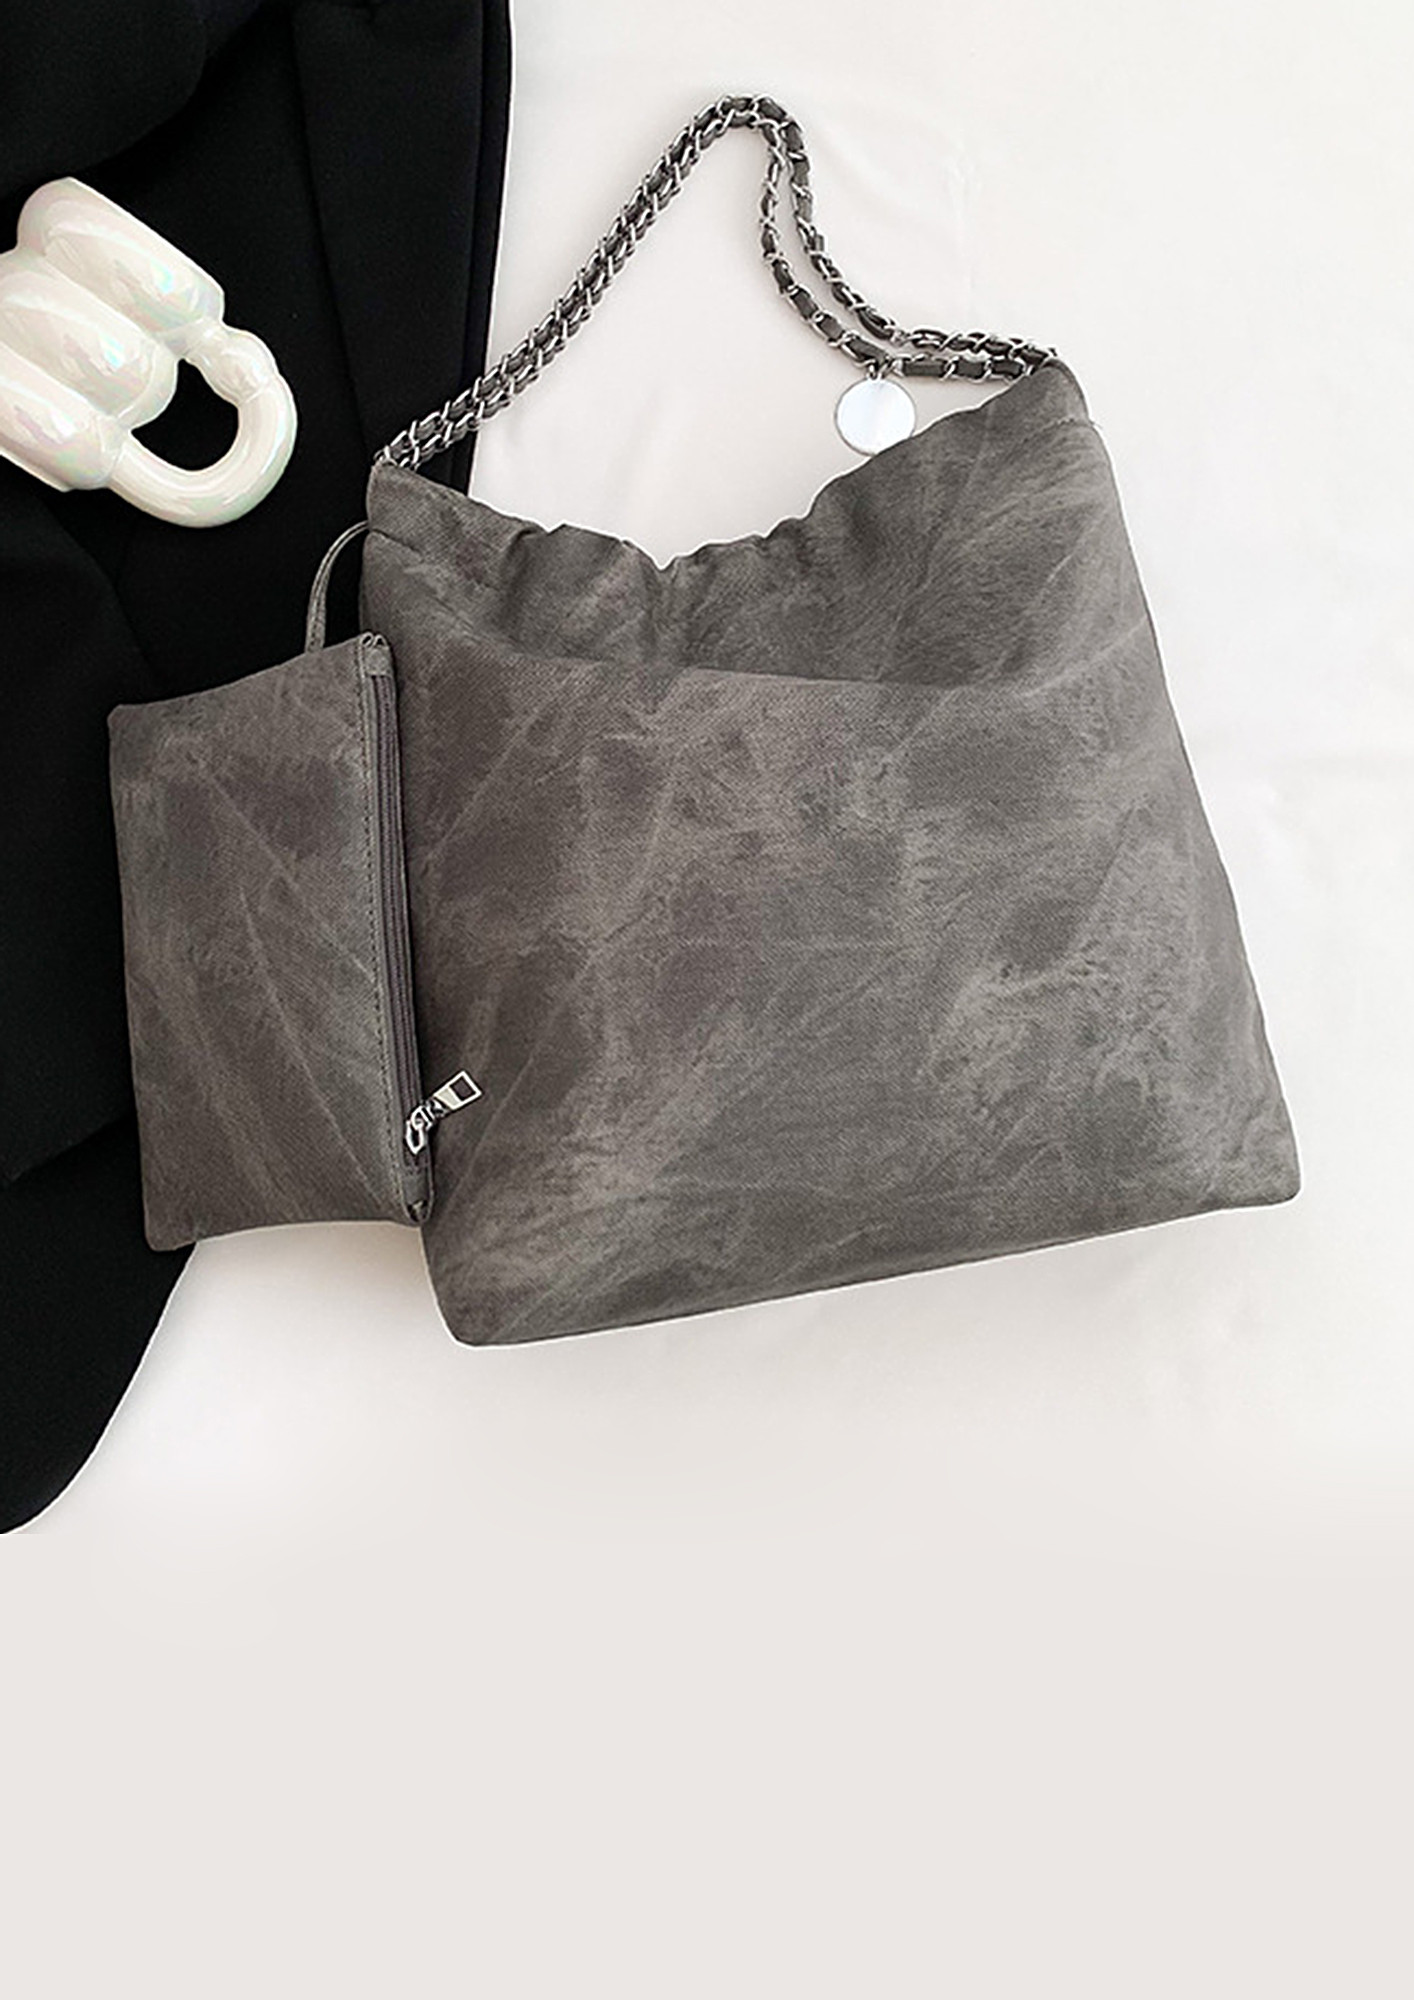 Black velour handbag, velour purse, women's purse, black purse with chain  straps, Mossimo Bag, Mossimo Purse